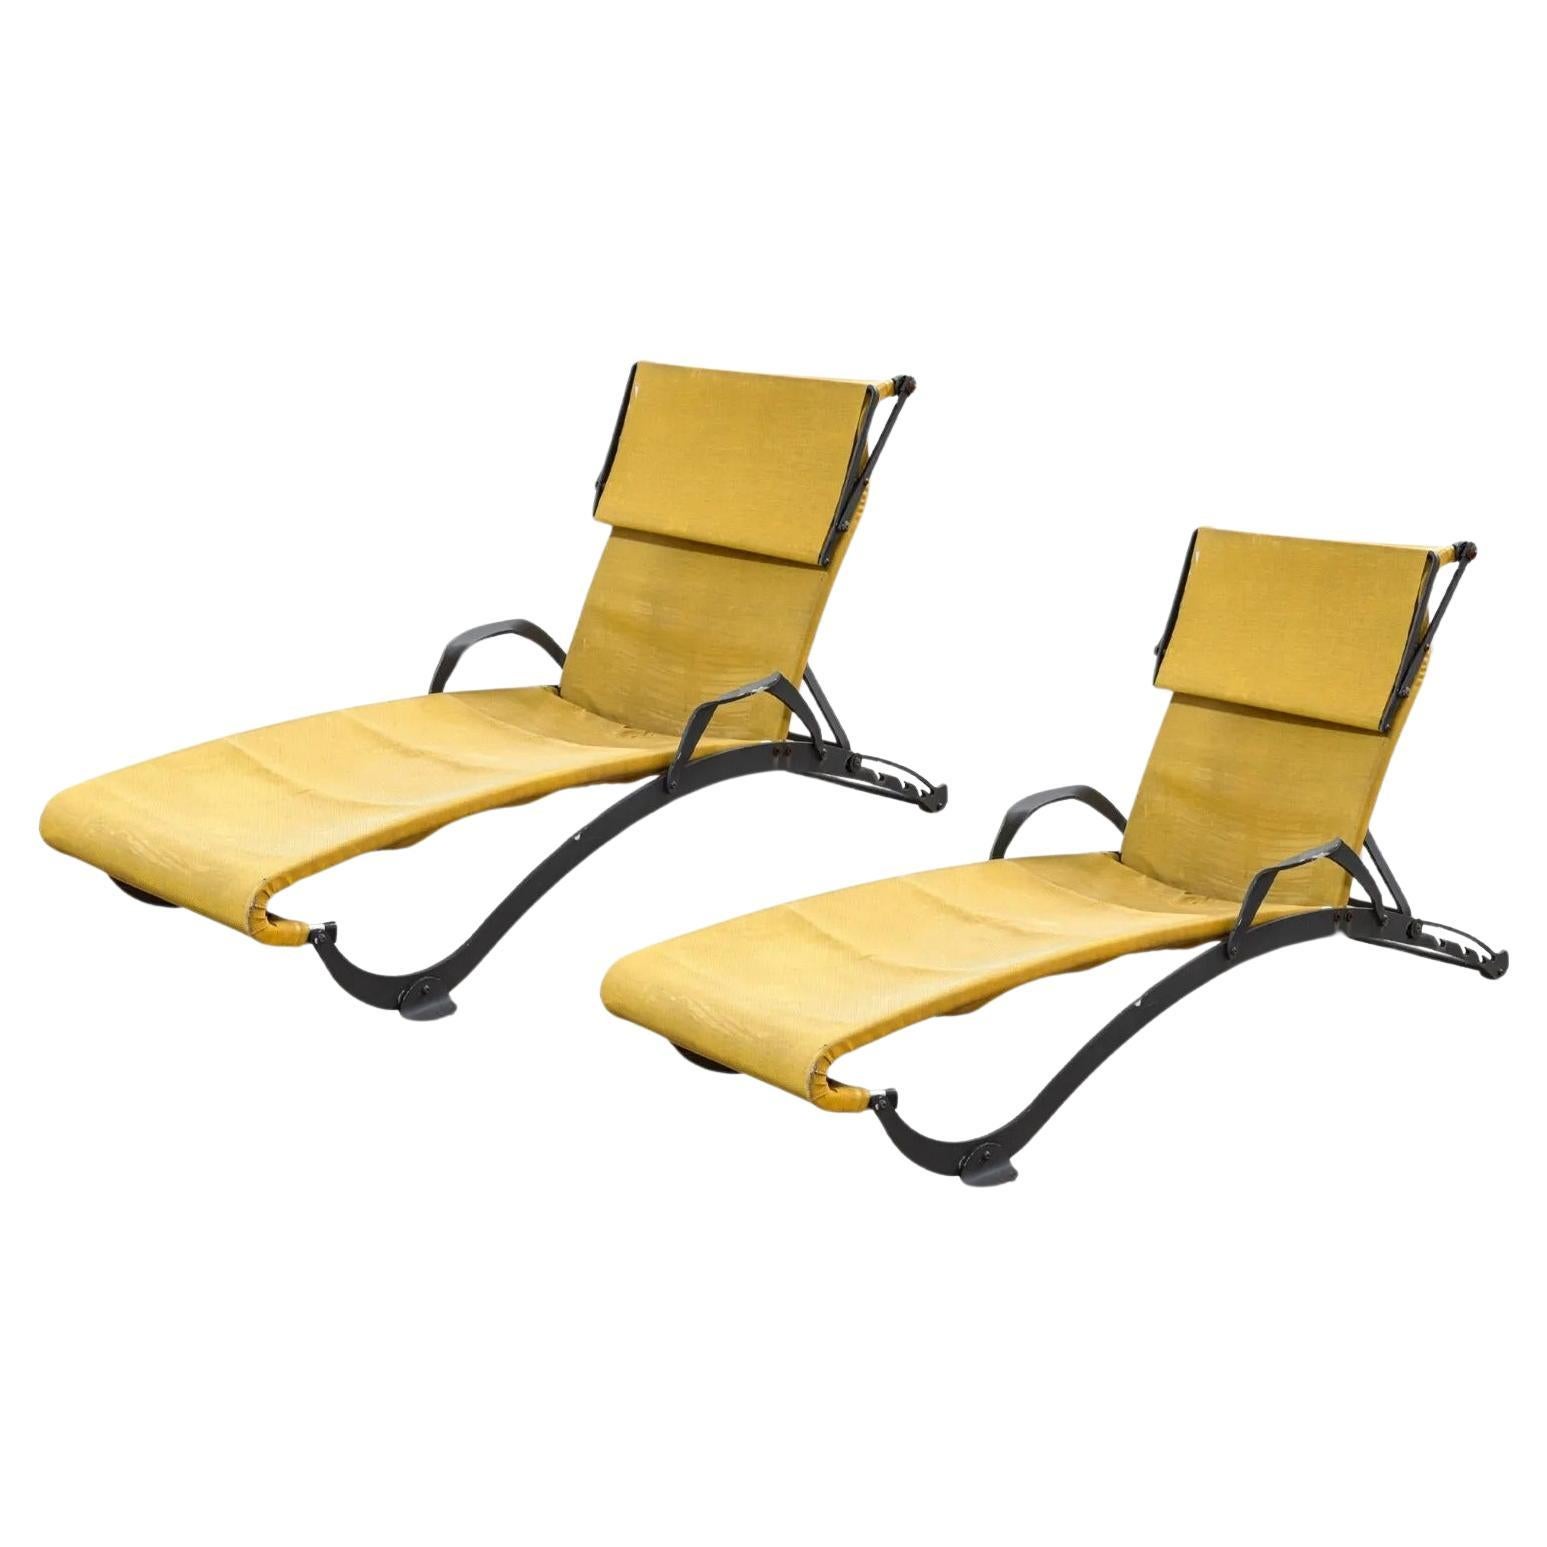 5 Sterne Italien Patio Verstellbare Liegestühle Sun-friendly Lounge Chairs Mid Century